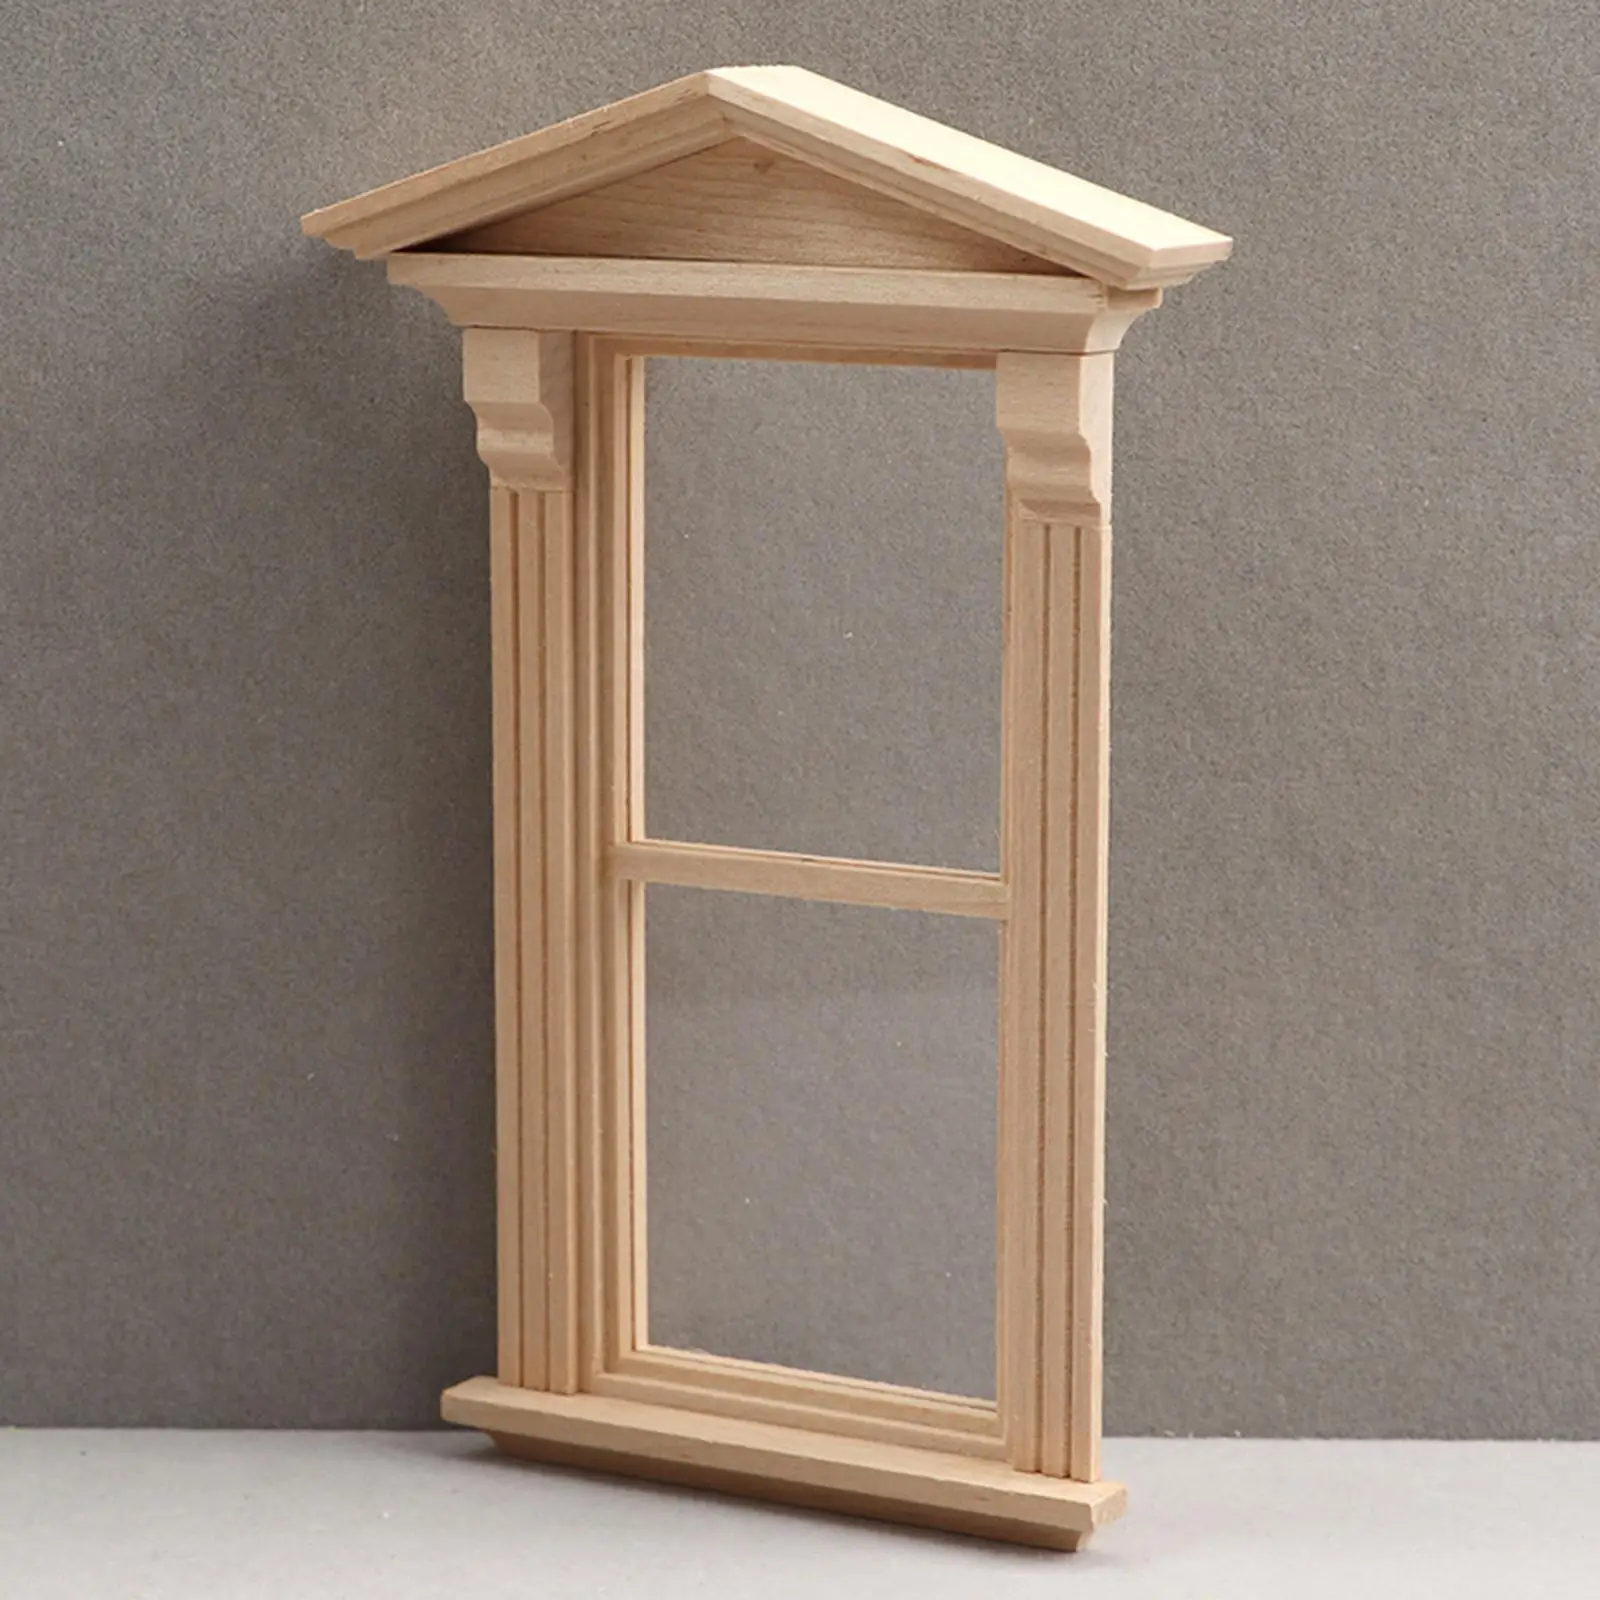 1:12 Miniature Wooden Window DIY Scene Accessories Dollhouse Decoration Accessories Decoration Durable for Garden Yard Decor